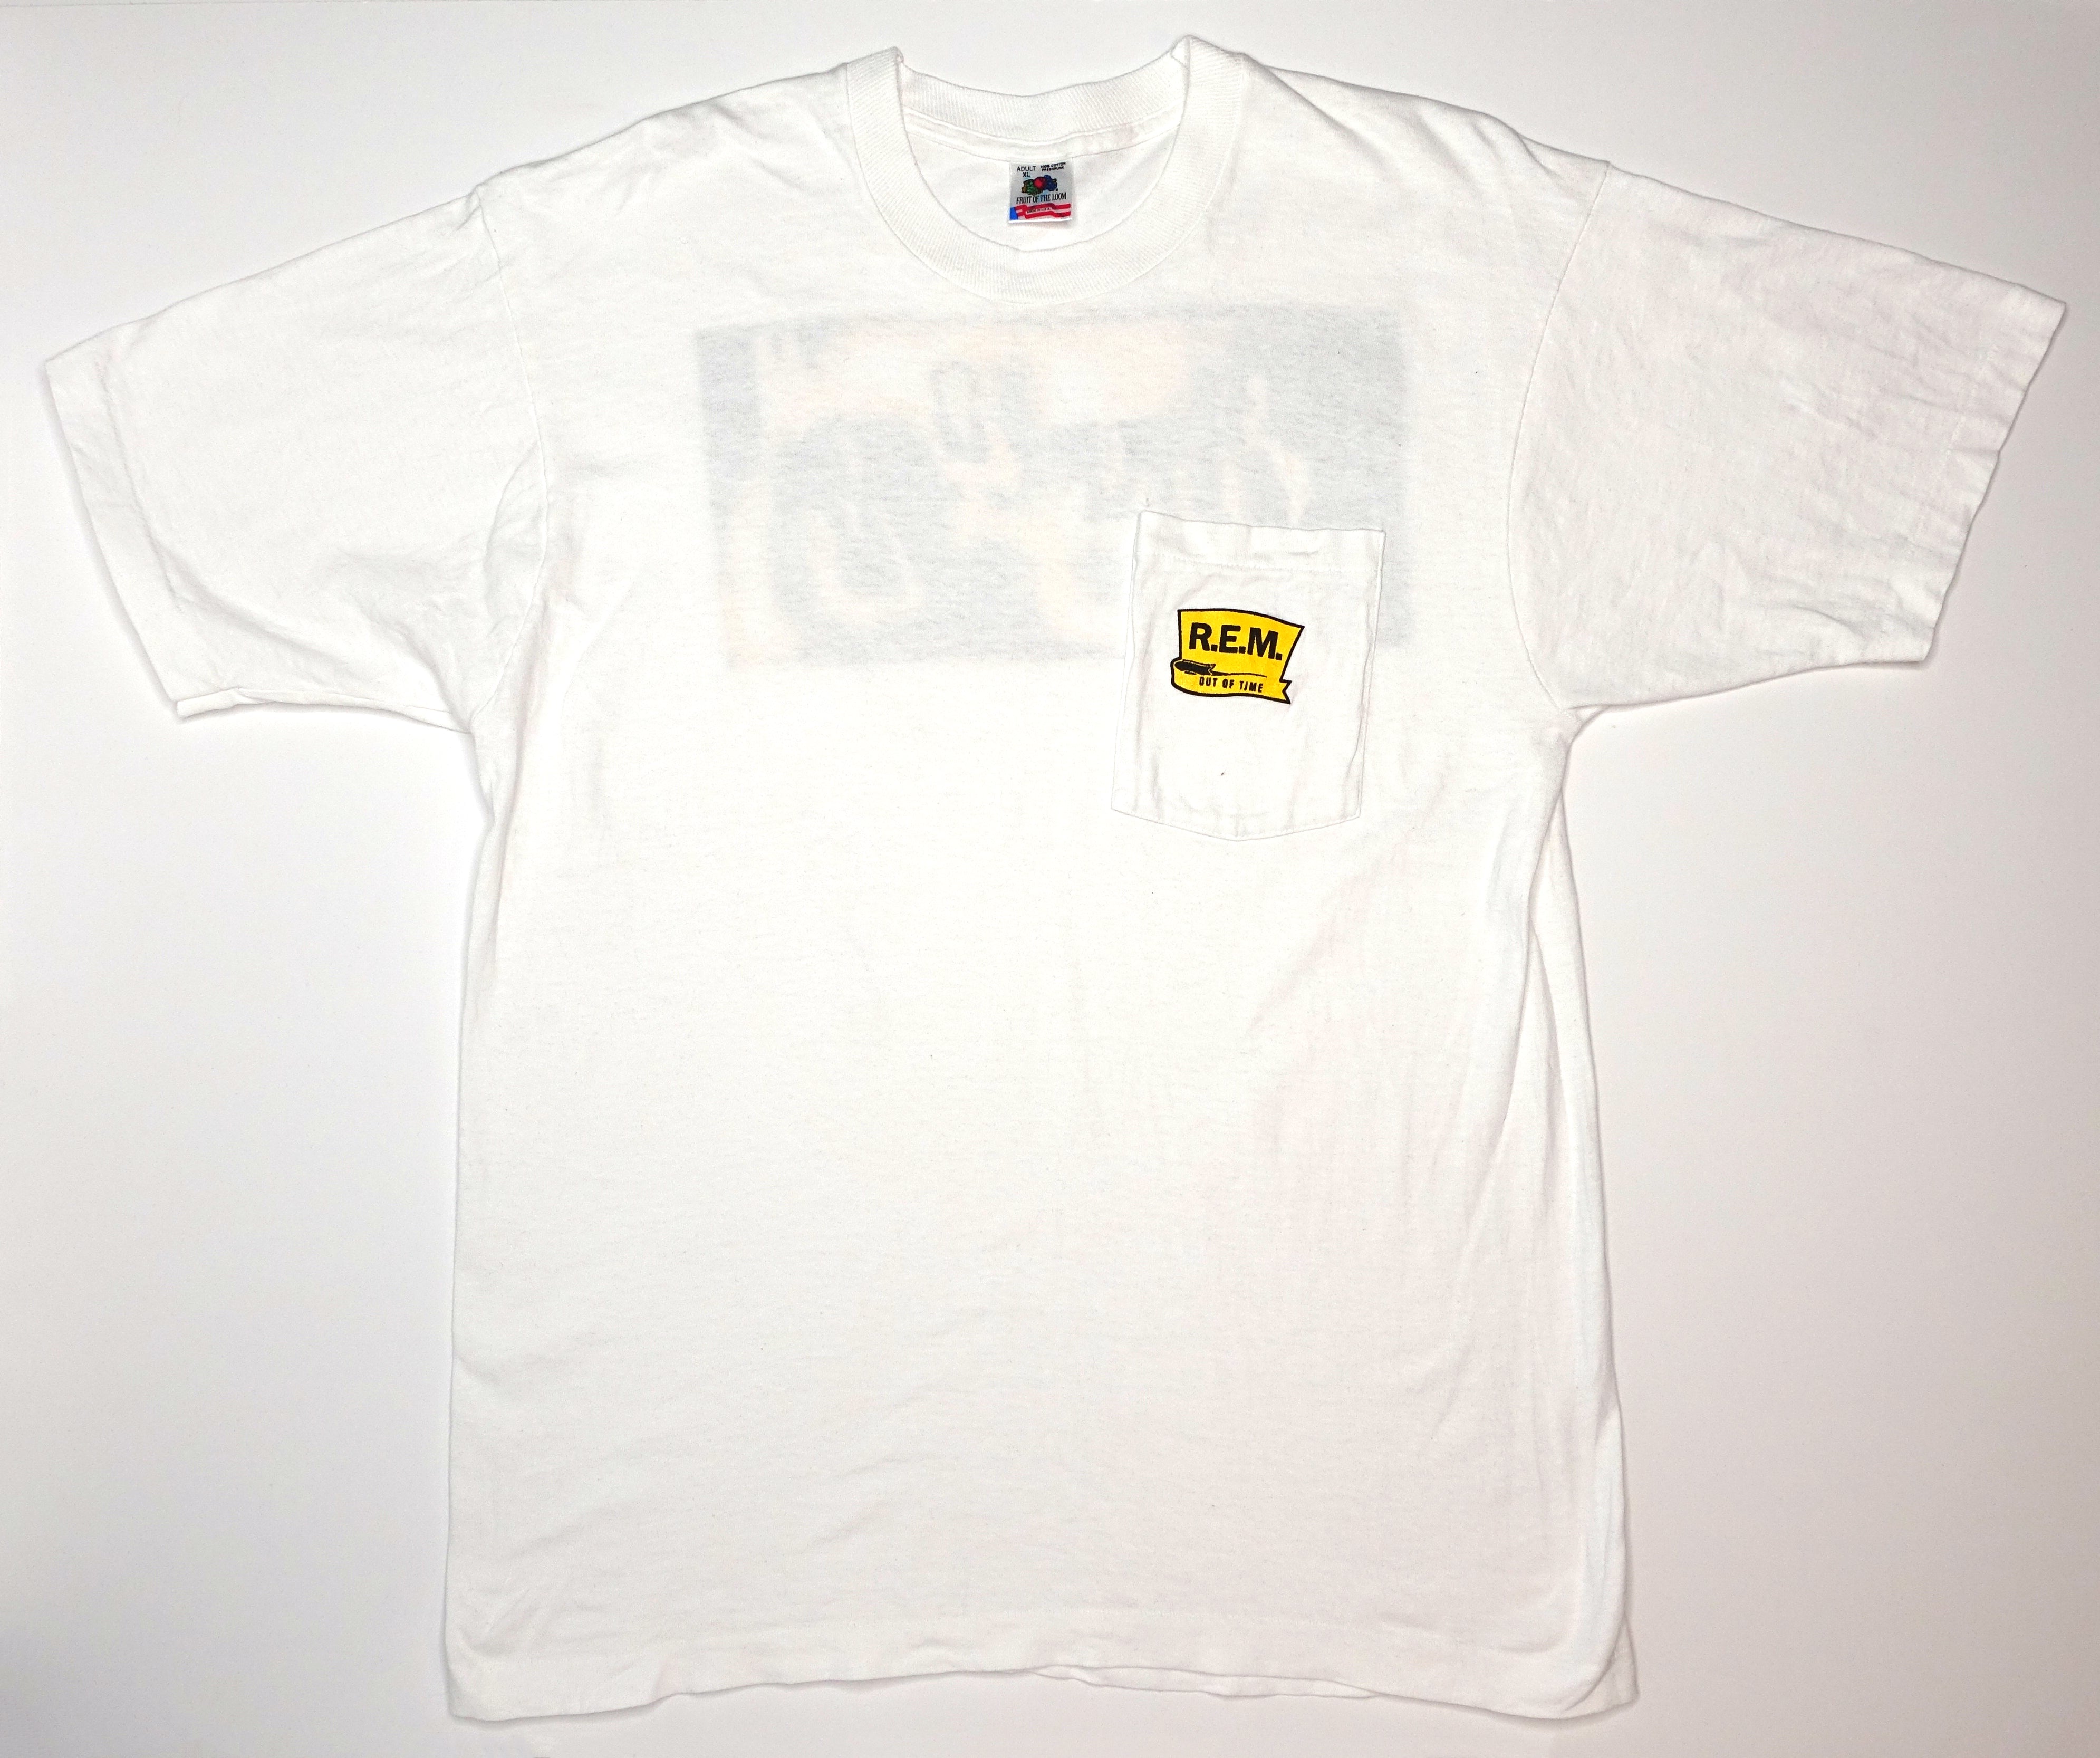 R.E.M. – Out Of Time 1991 Pocket Tour Shirt Size XL